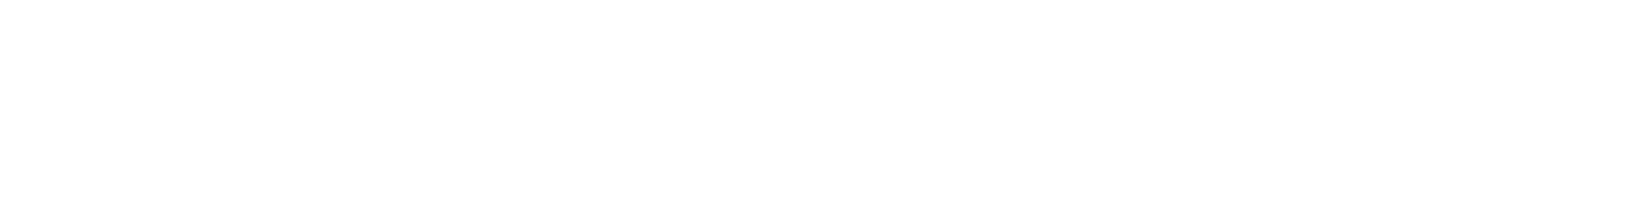 logo-weekmeals-white